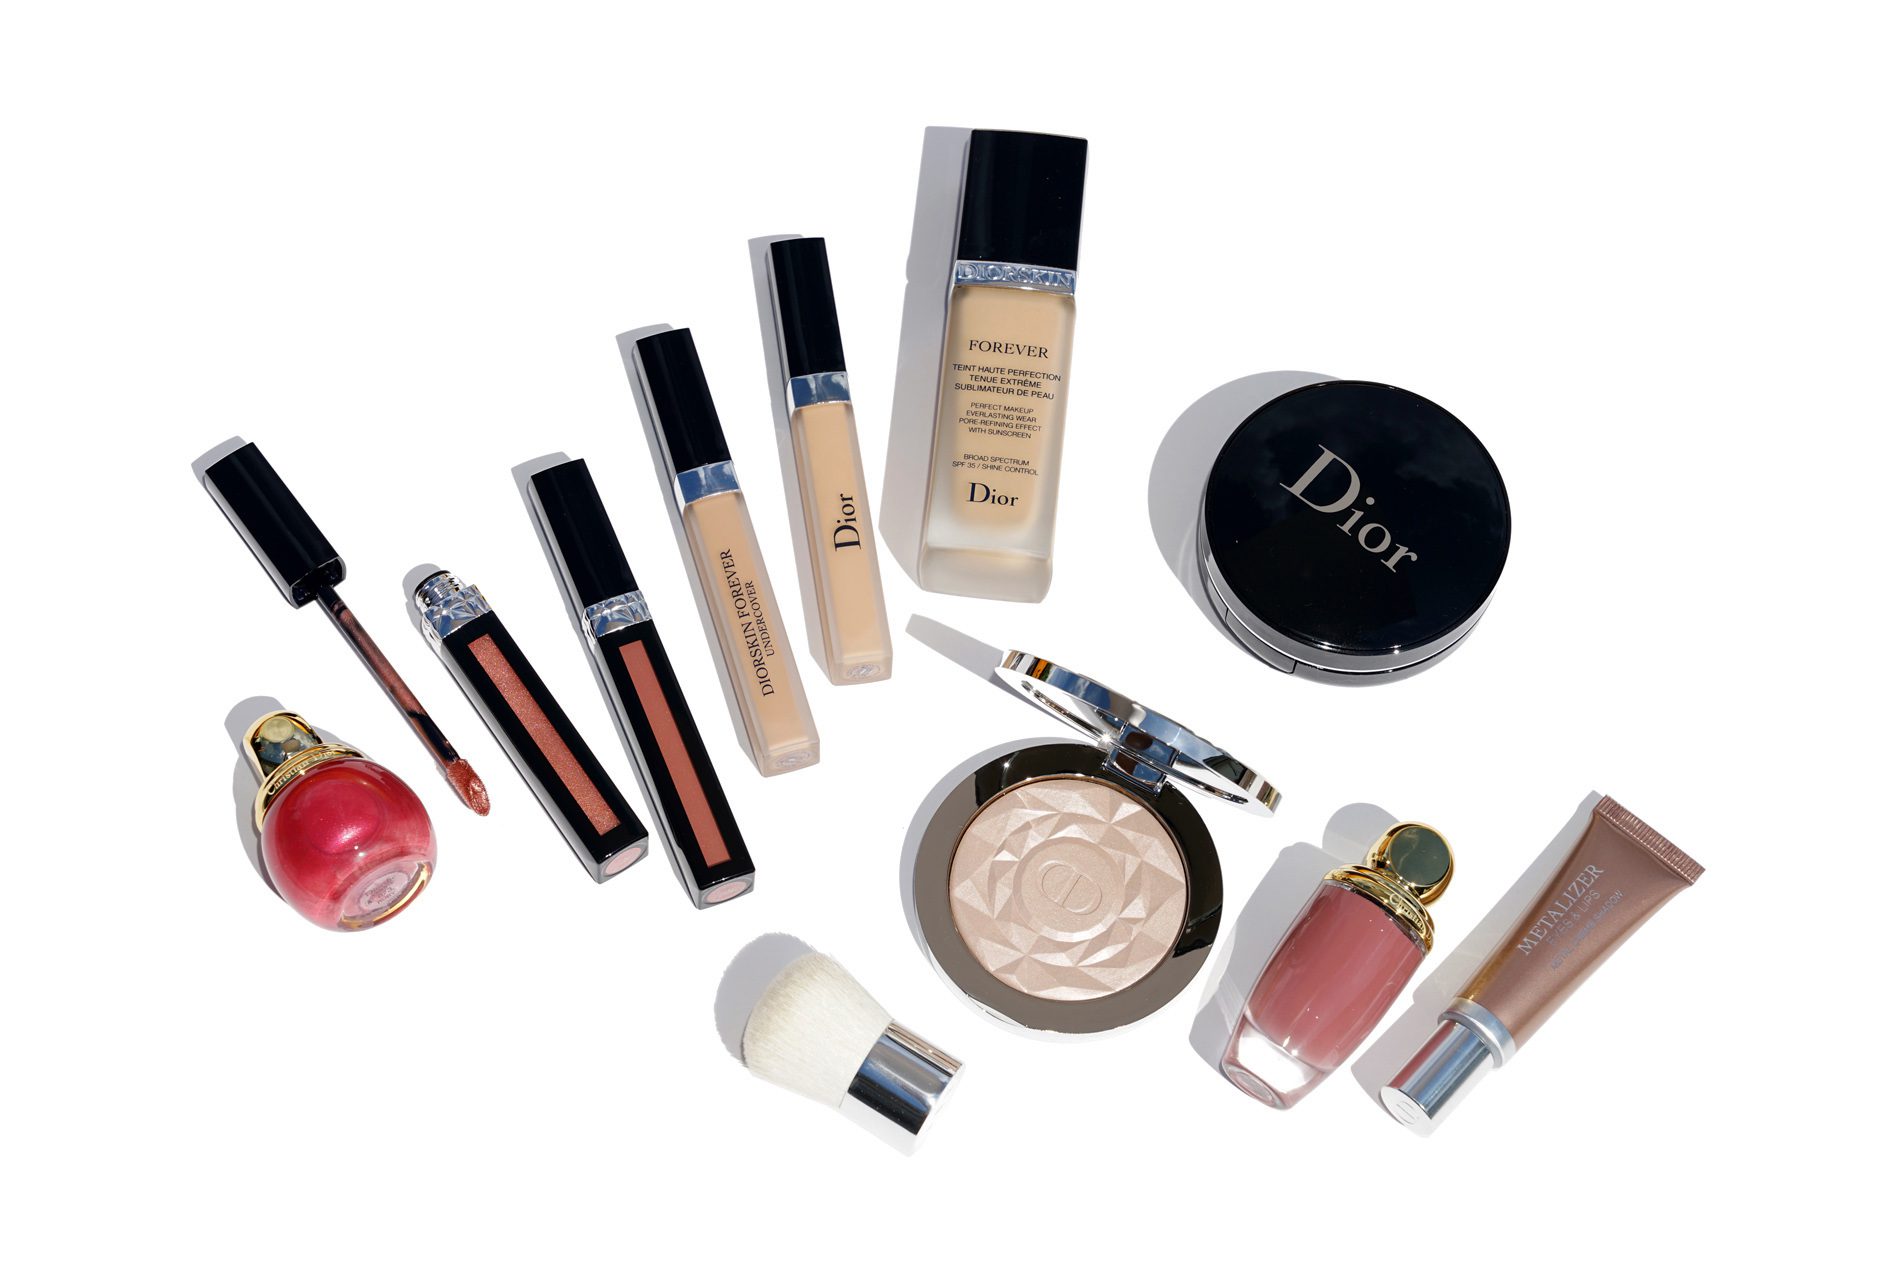 Dior Makeup Holiday, Lip + Base Haul - The Beauty Look Book